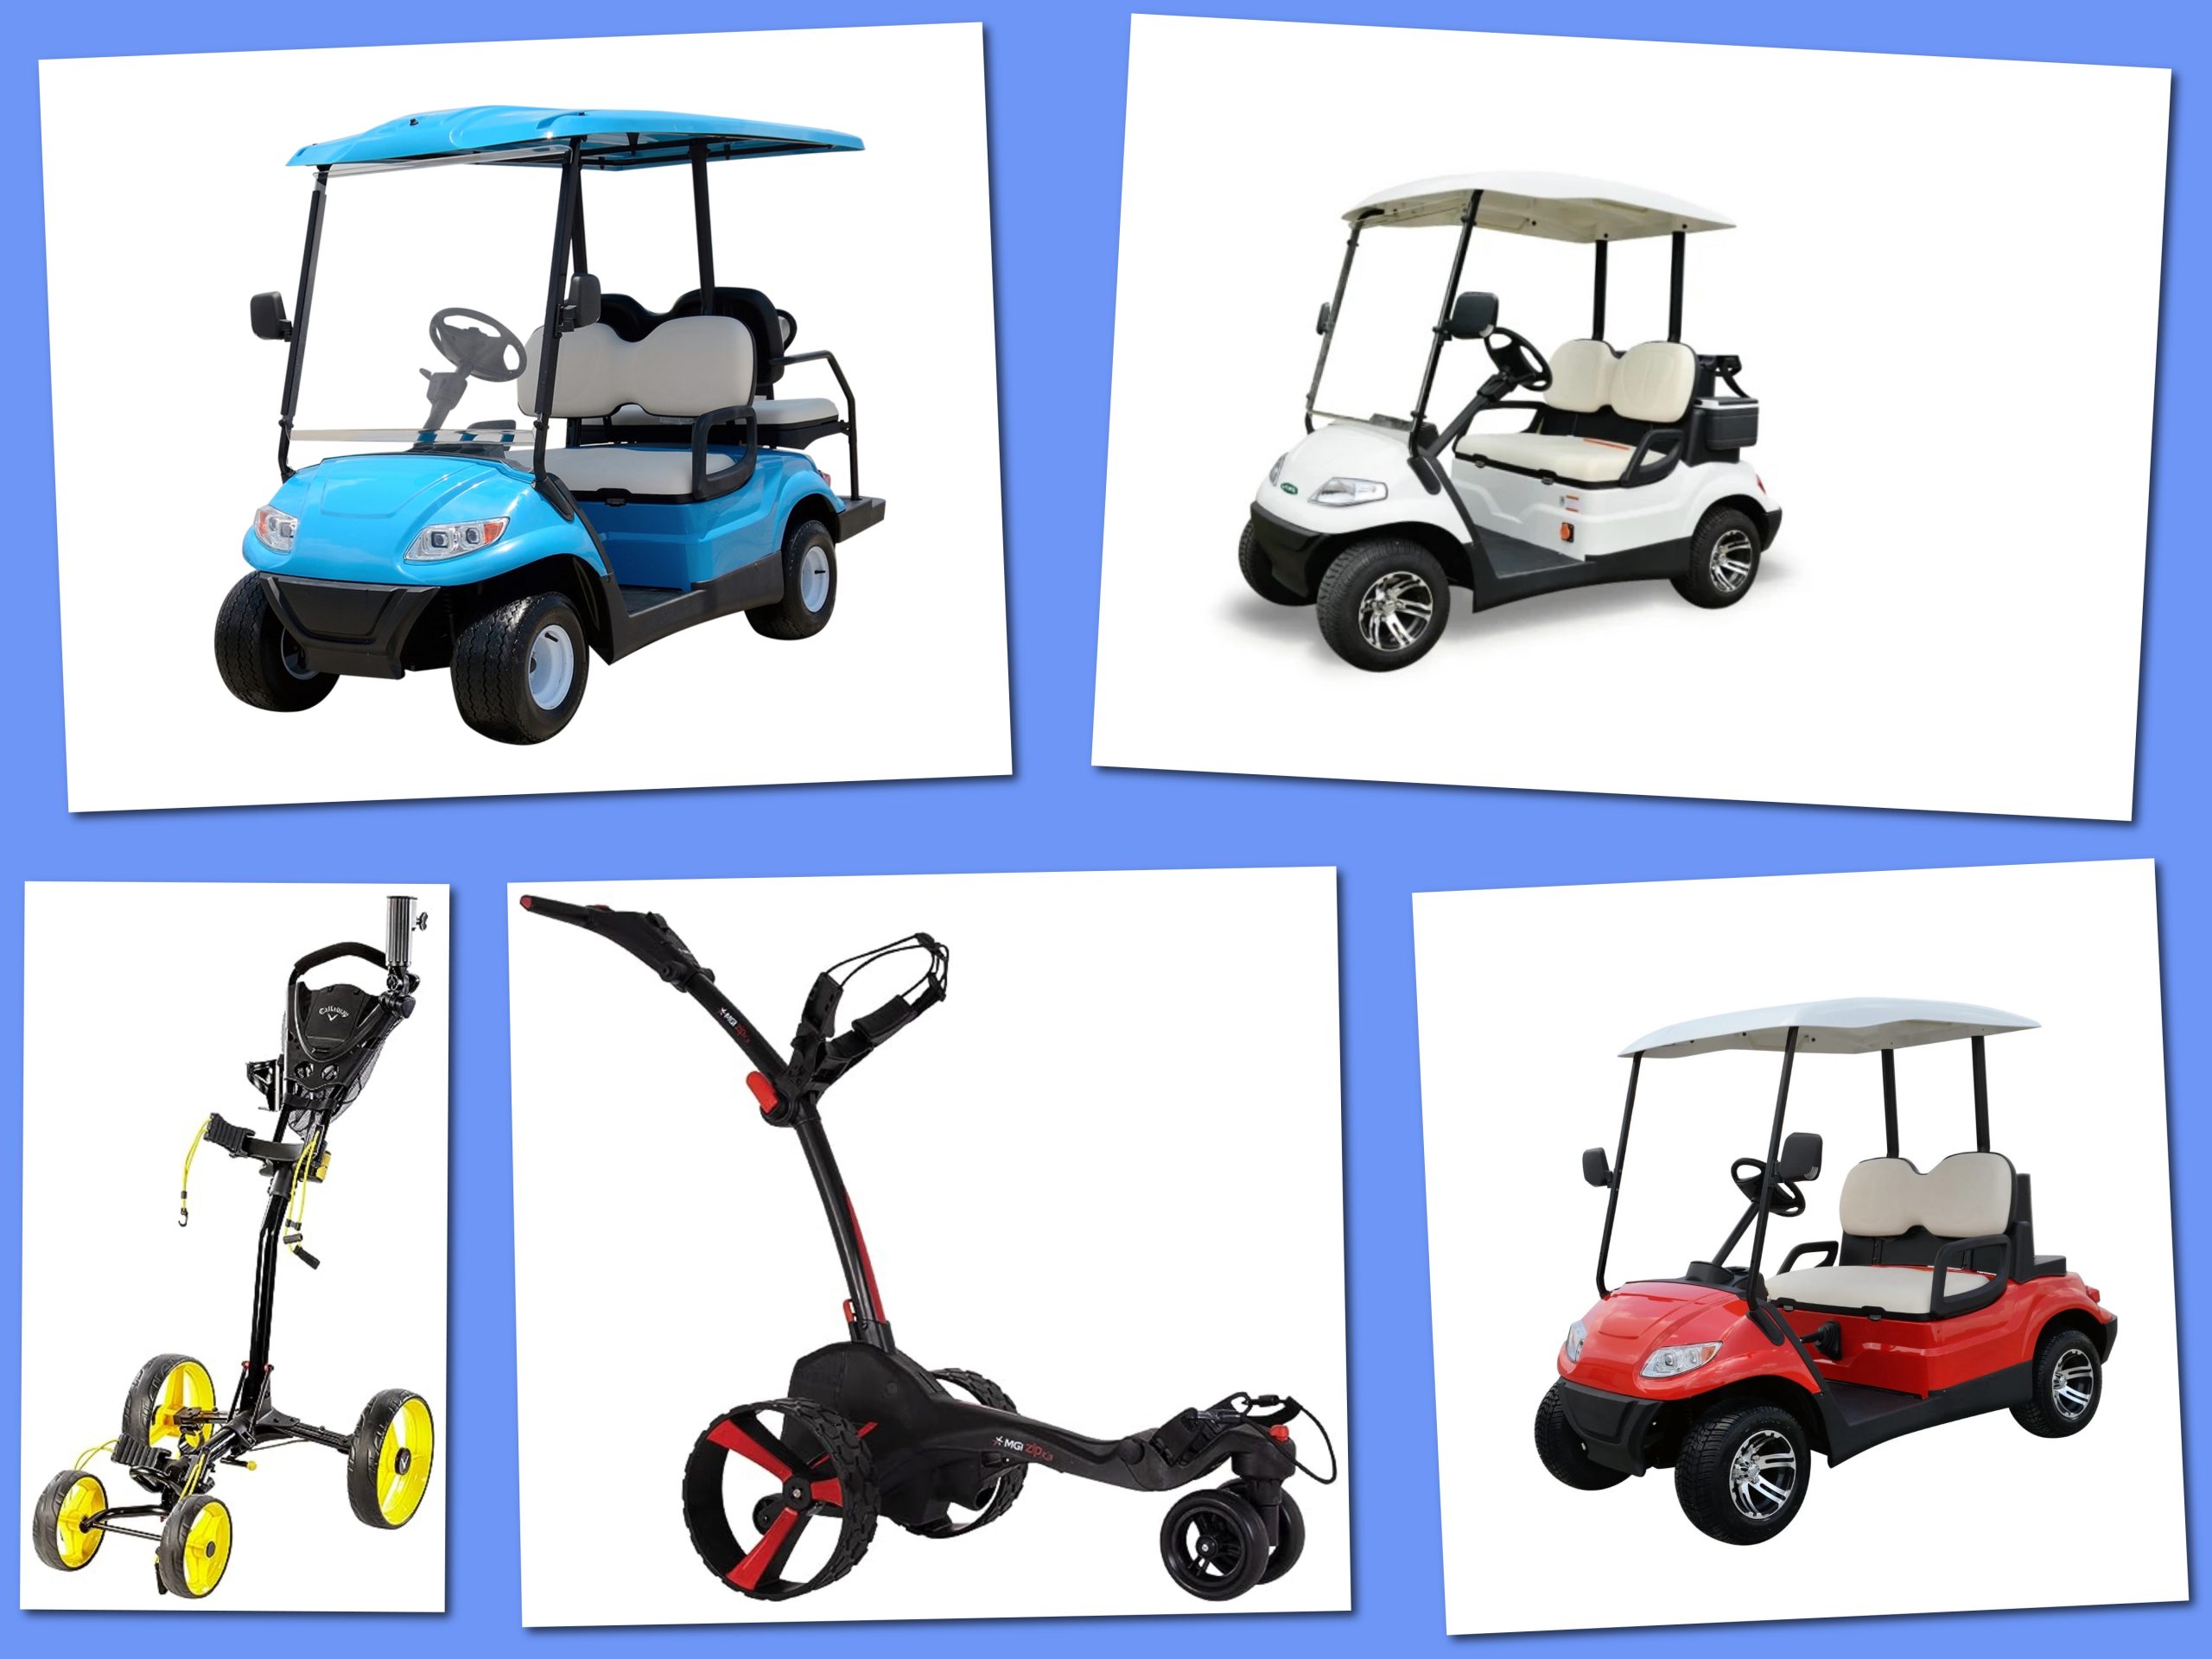 Golf Cart Buying Guide